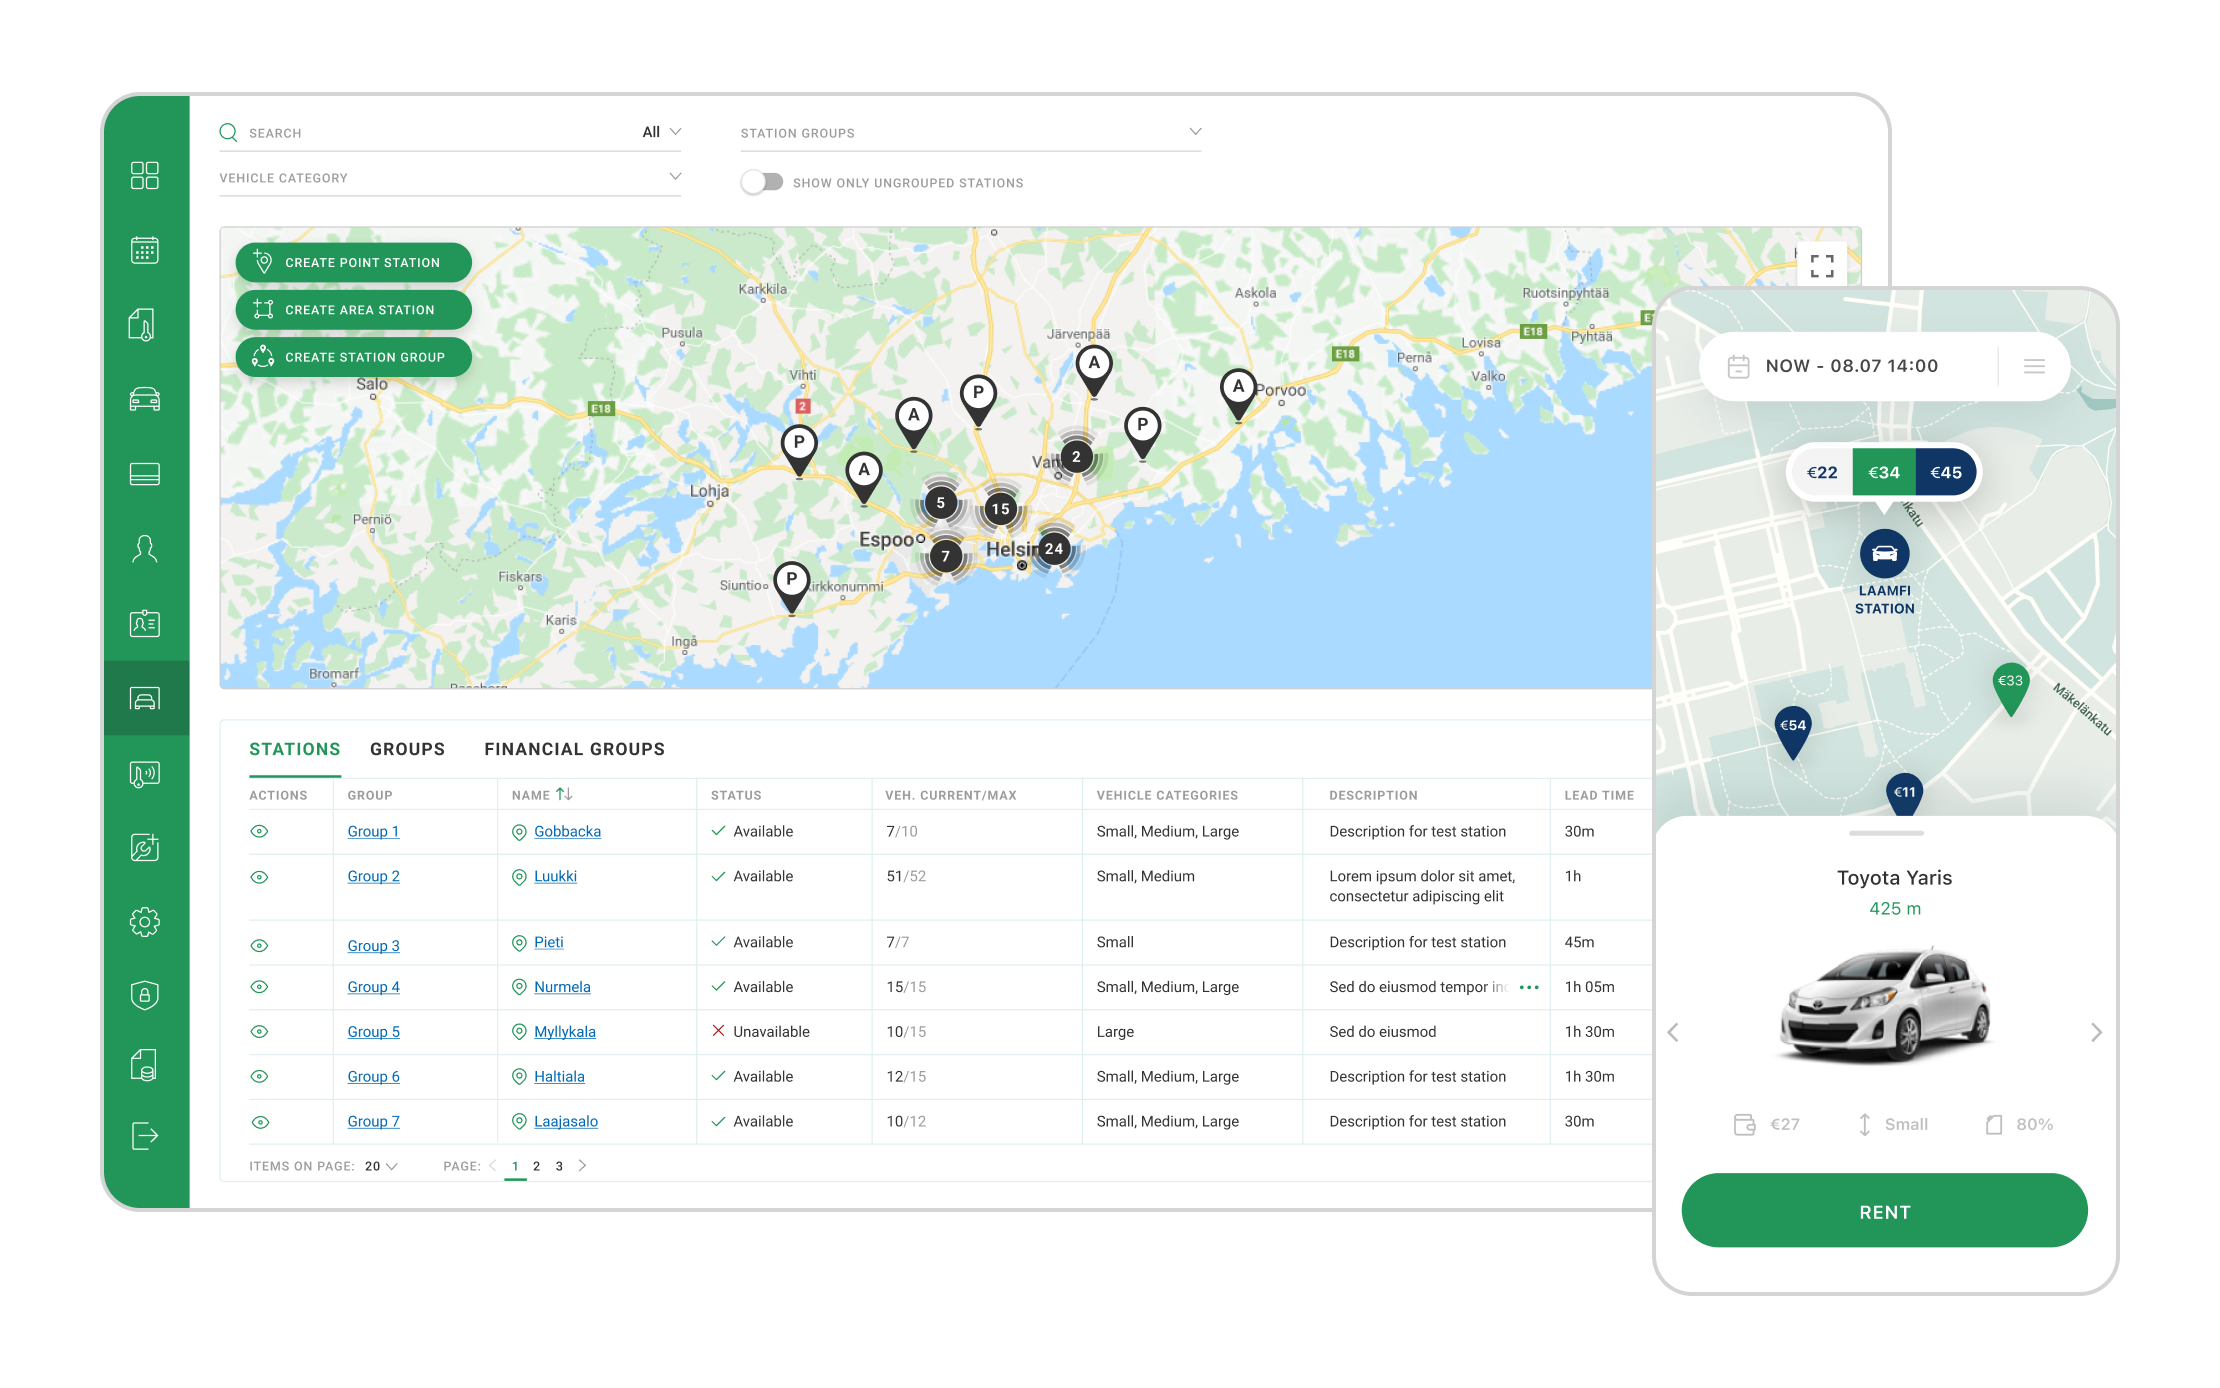 Web and mobile versions of Europcar's platform